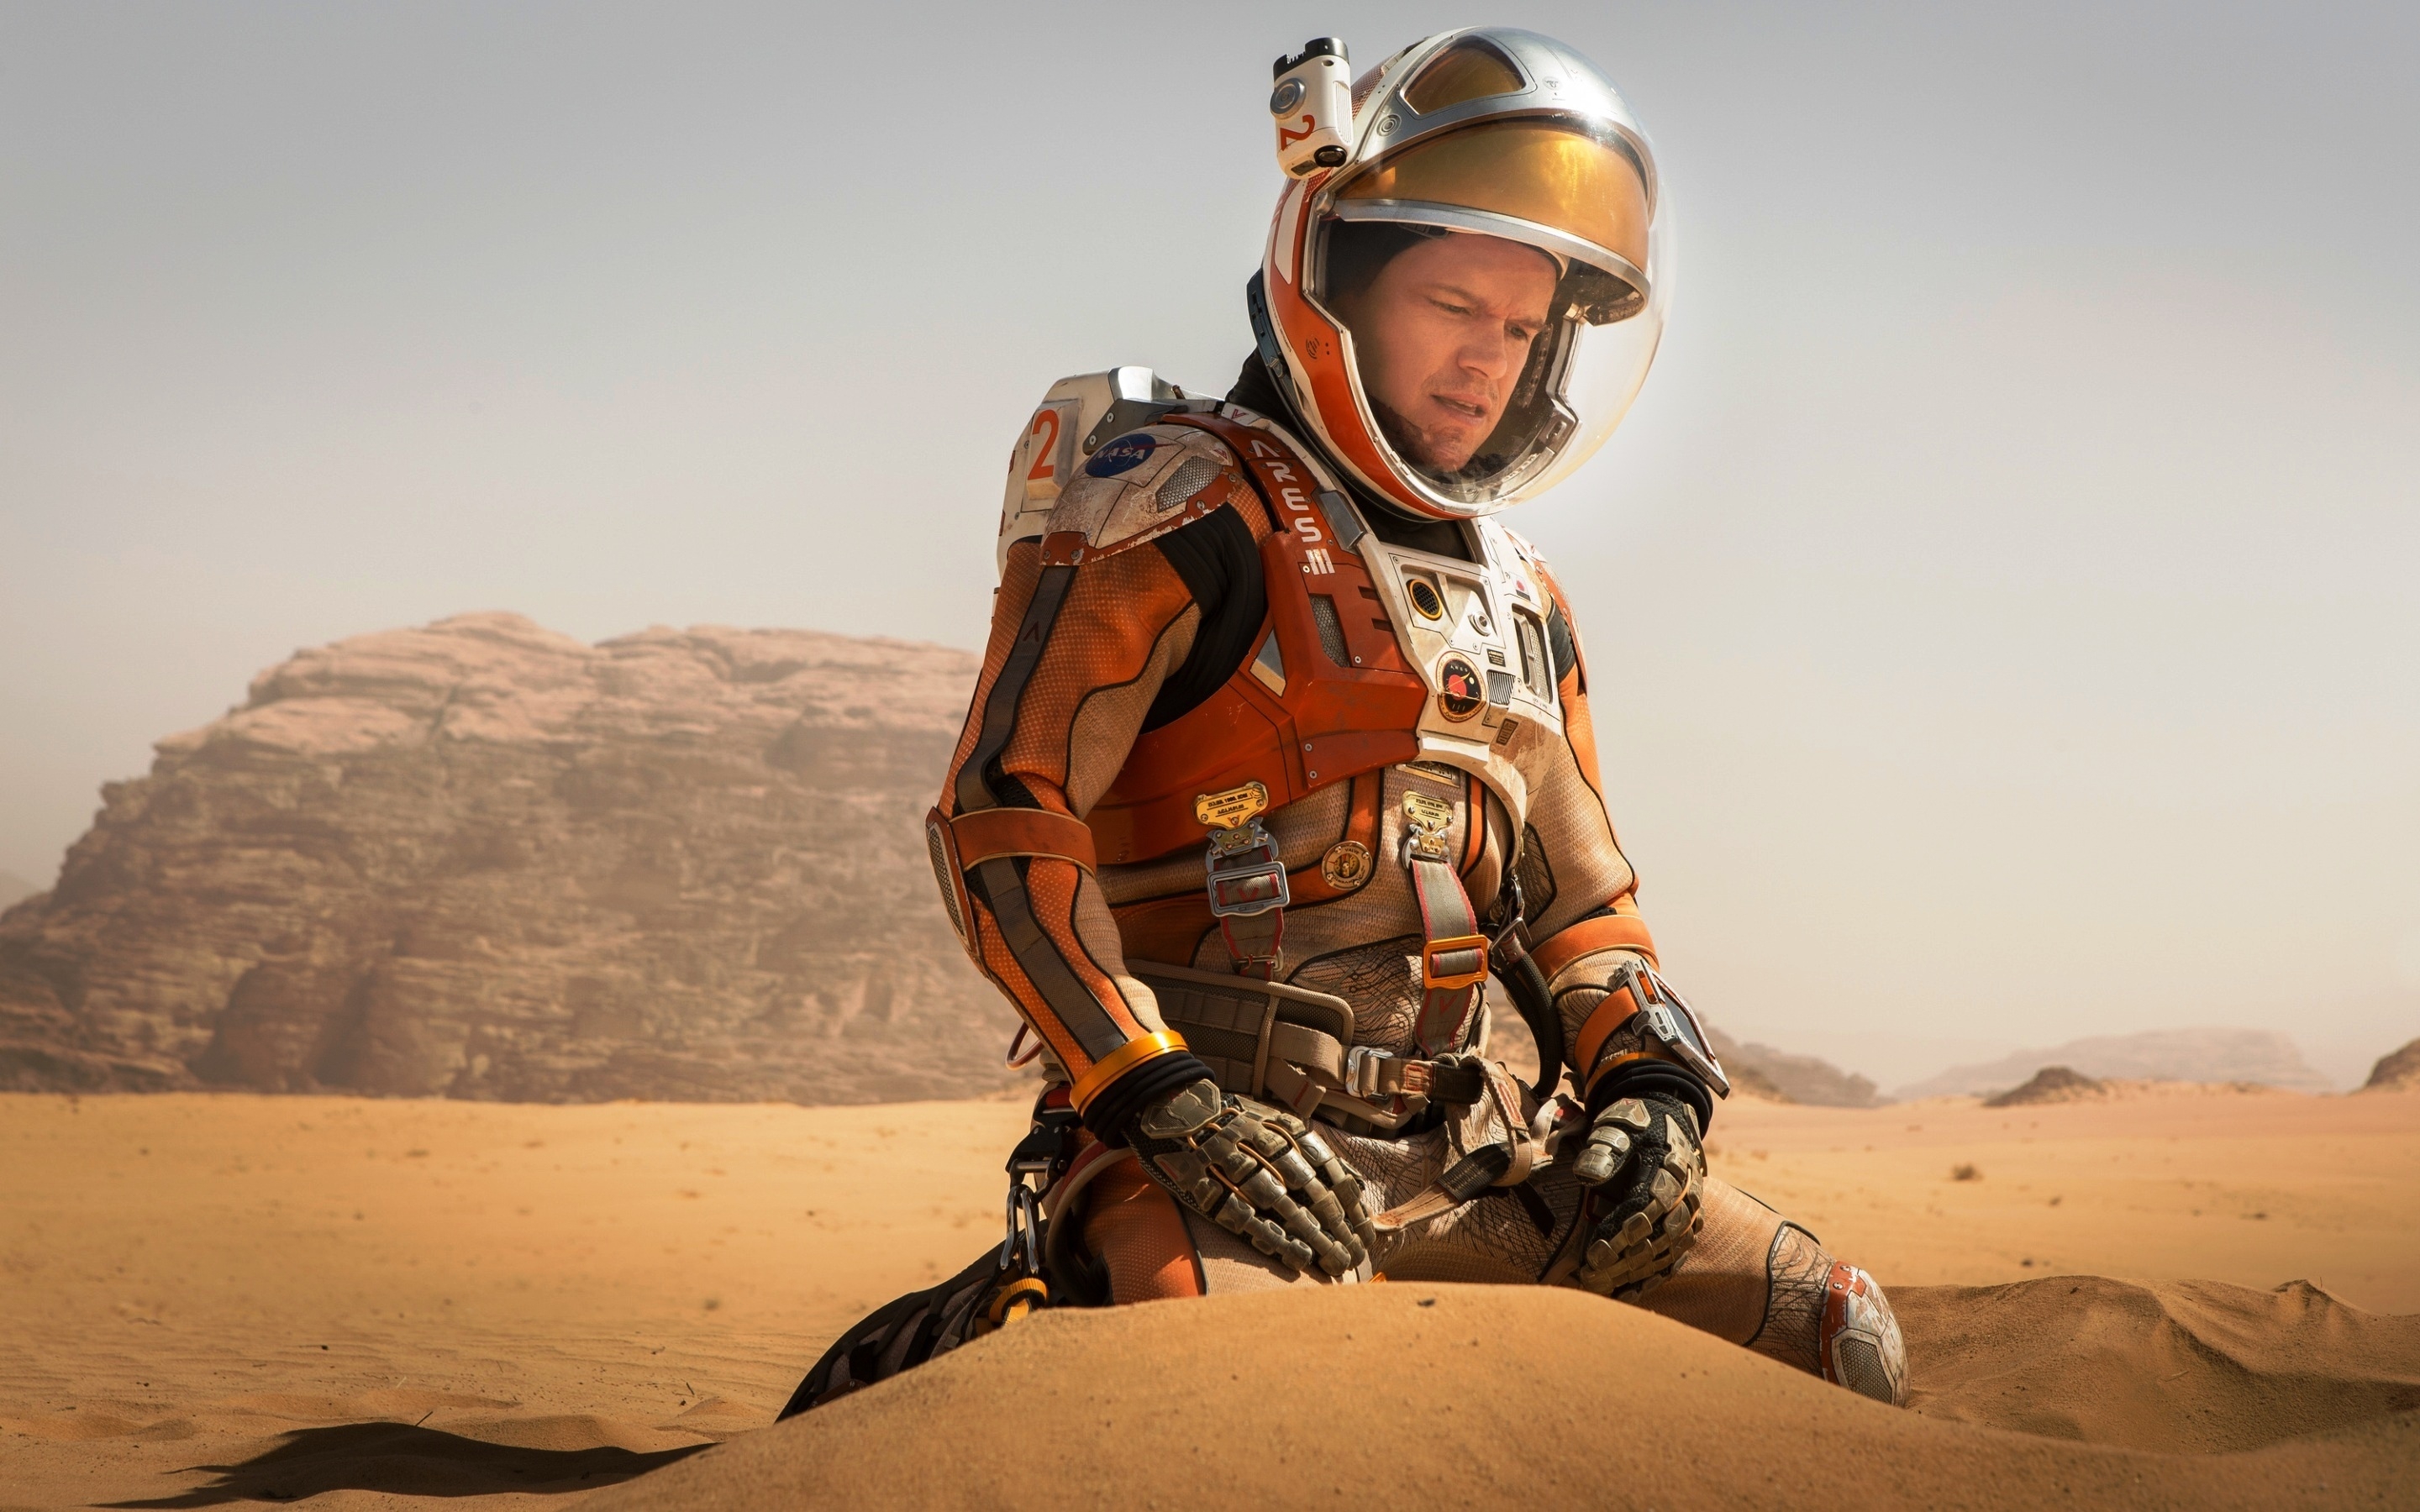 The Martian Matt Damon for 2880 x 1800 Retina Display resolution